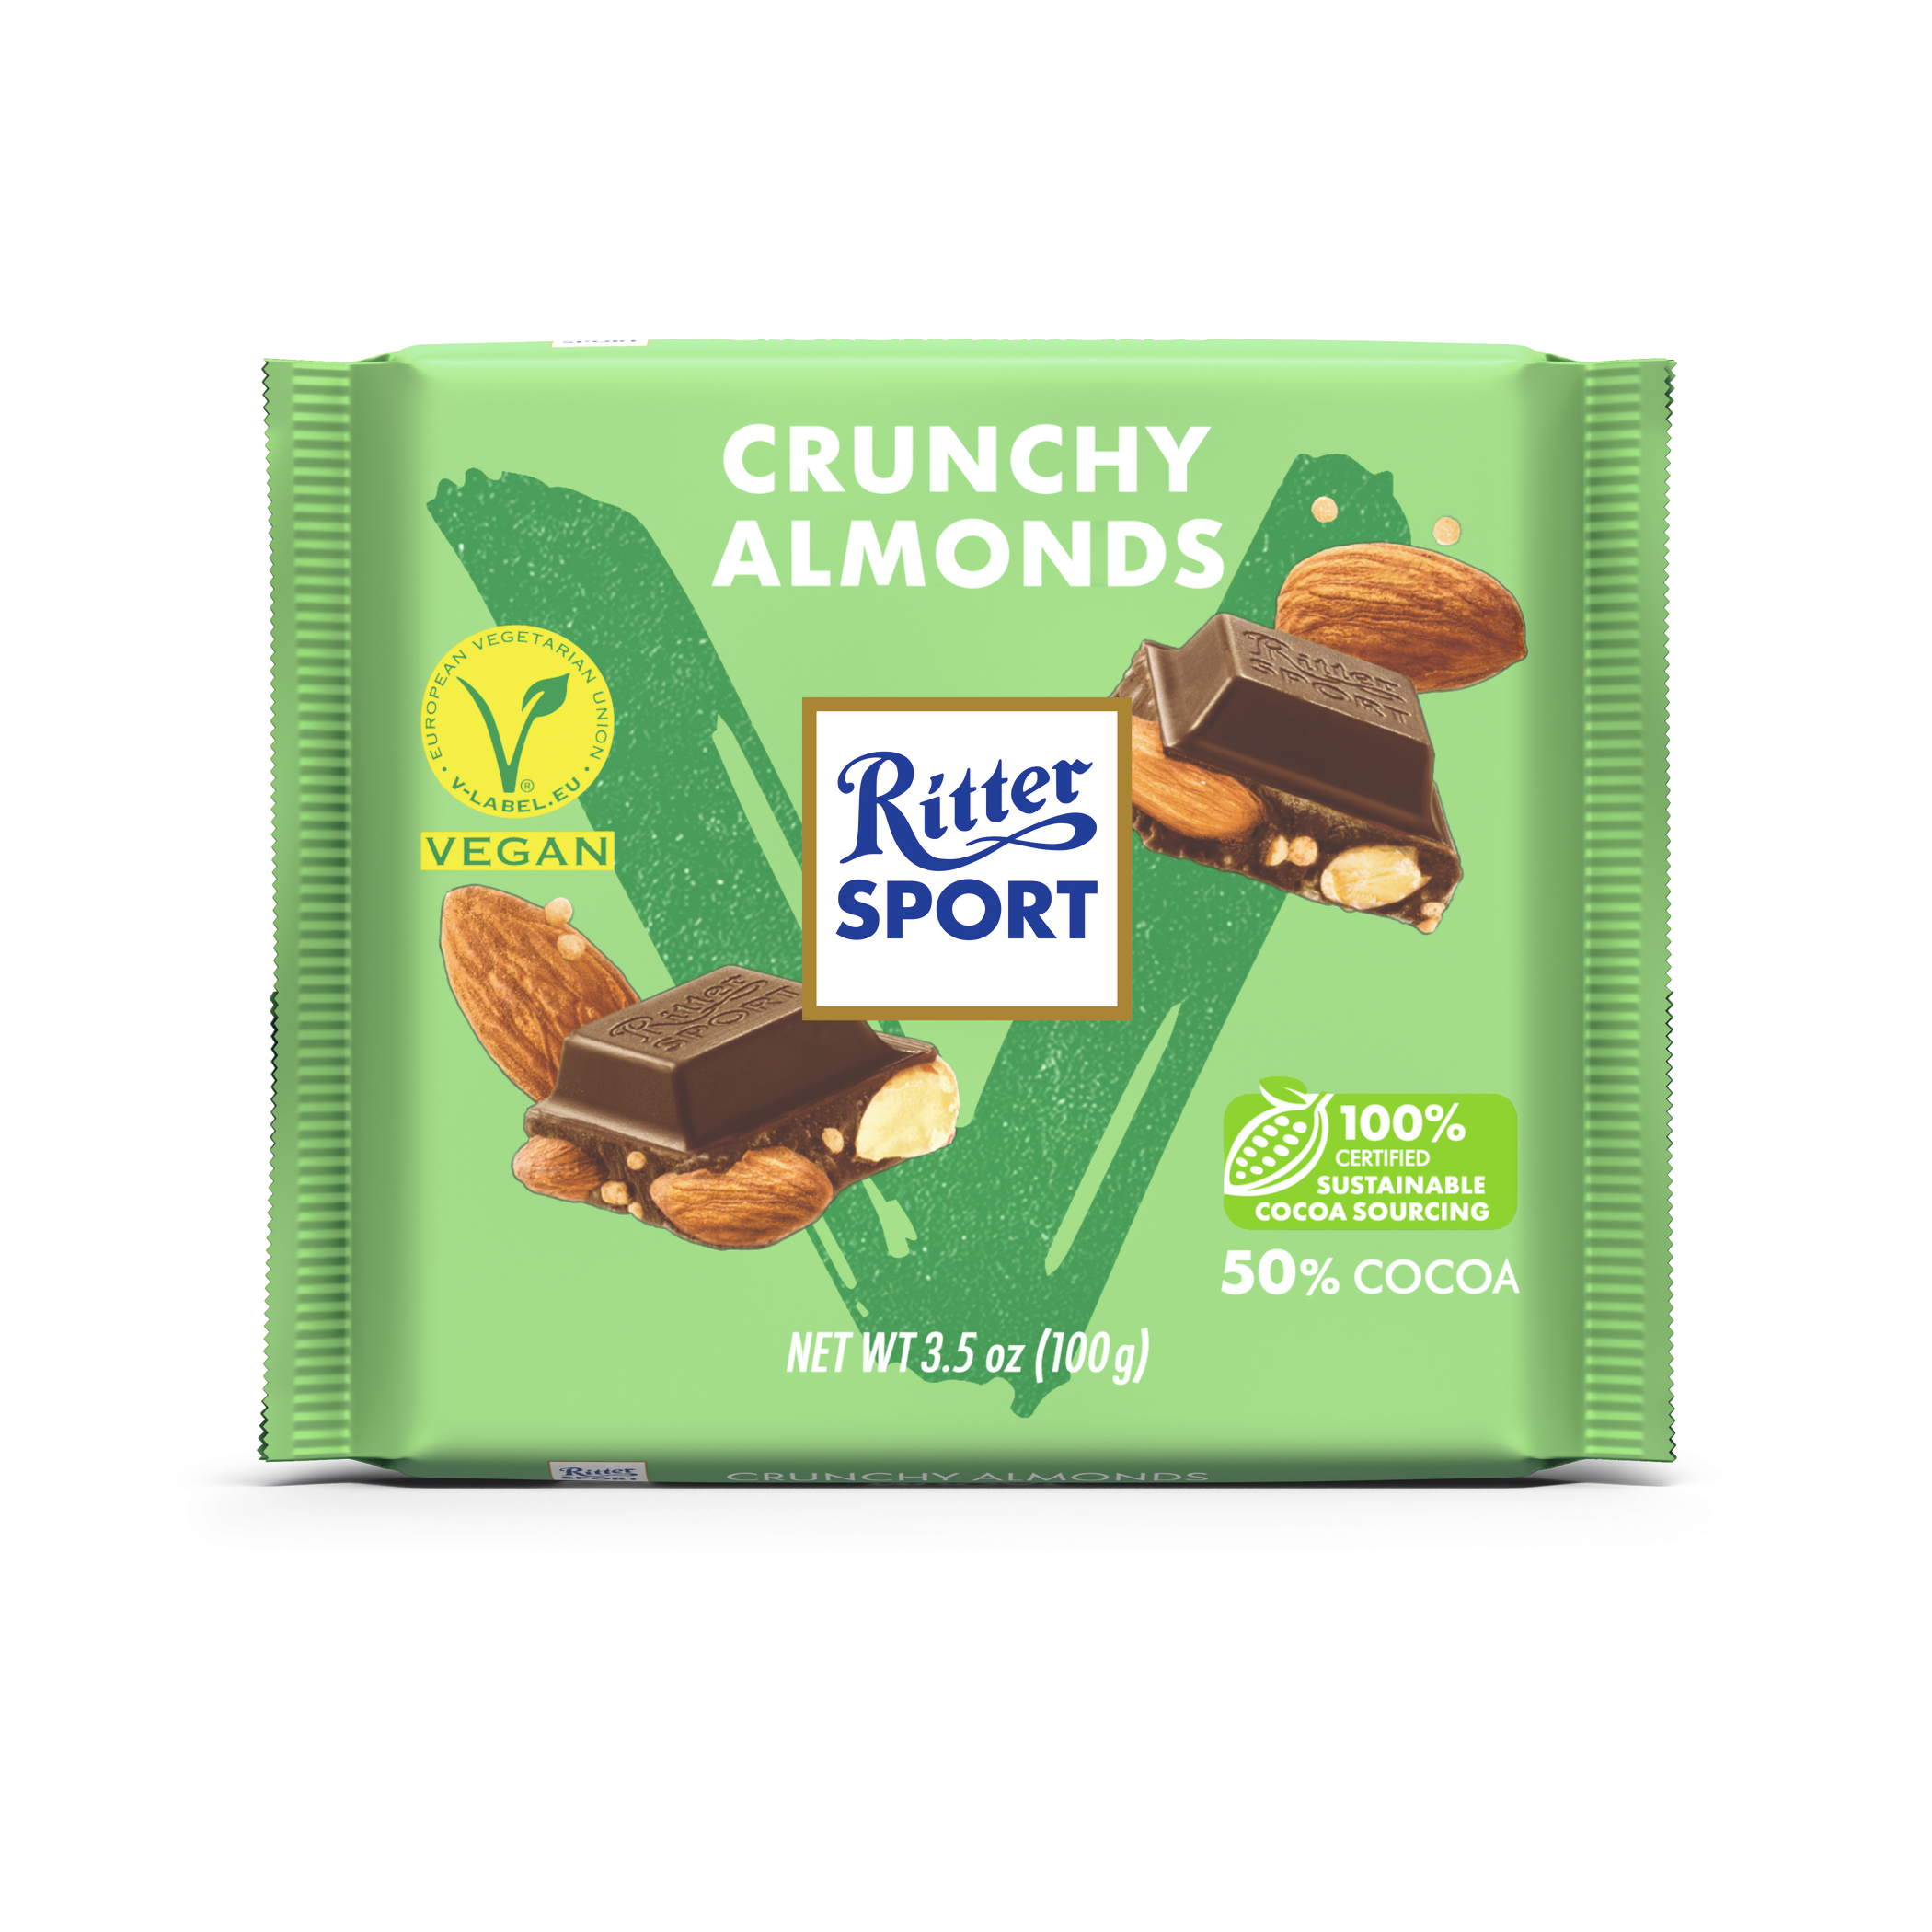 Ritter Vegan Crunchy Almonds Chocolate - 100g